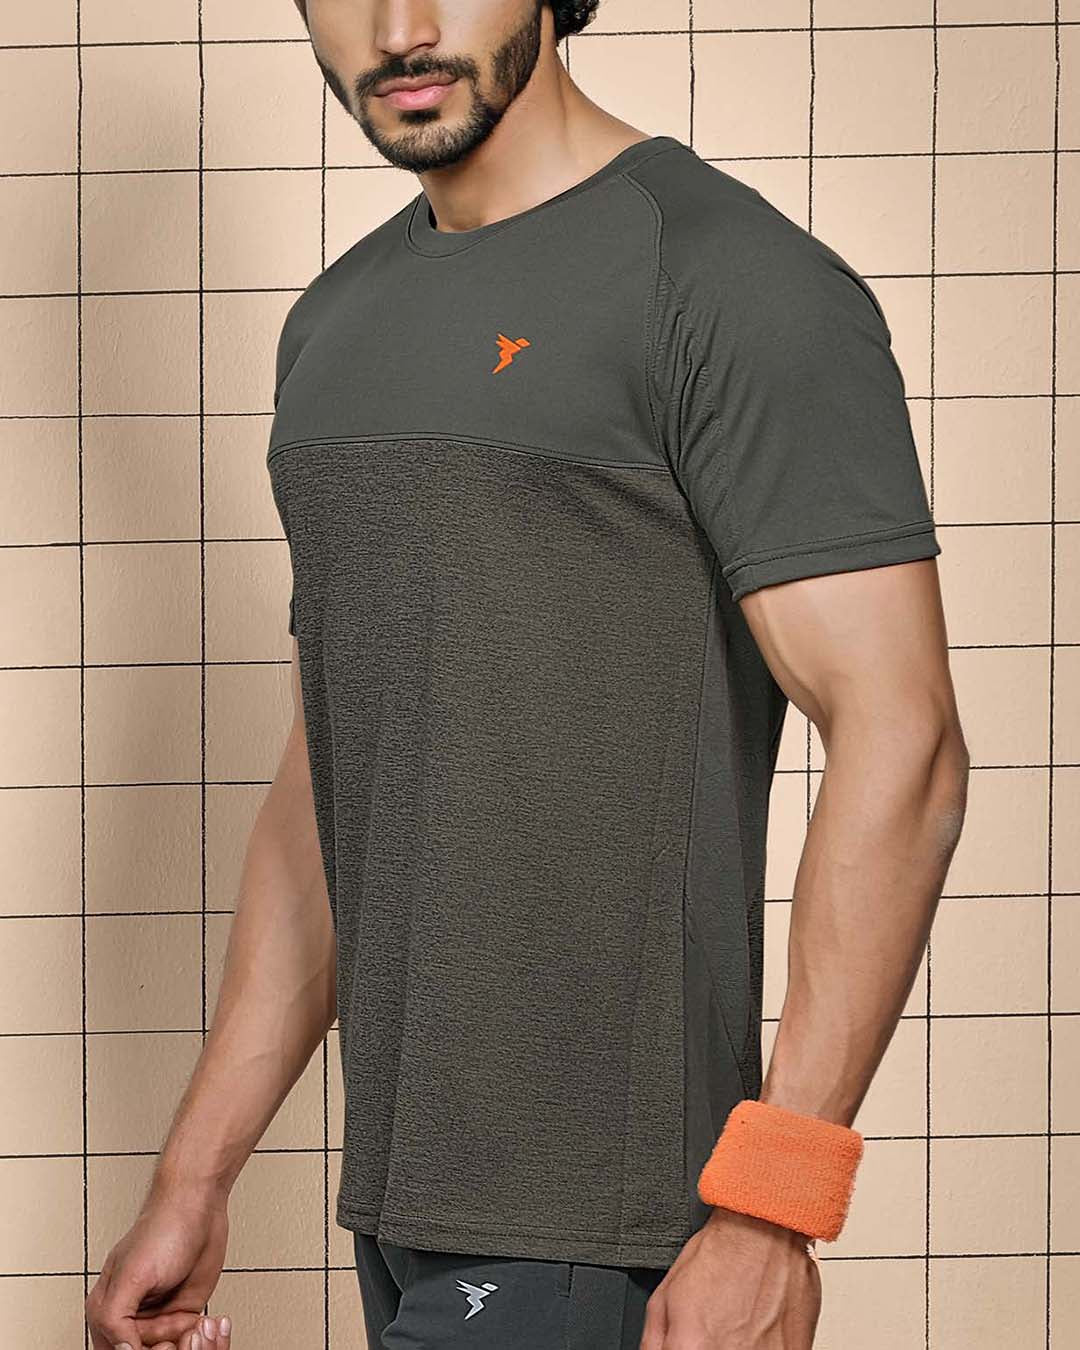 TechnoSport Crew Neck Half Sleeve Dry Fit T Shirt for Men P-516 (Olive Green)